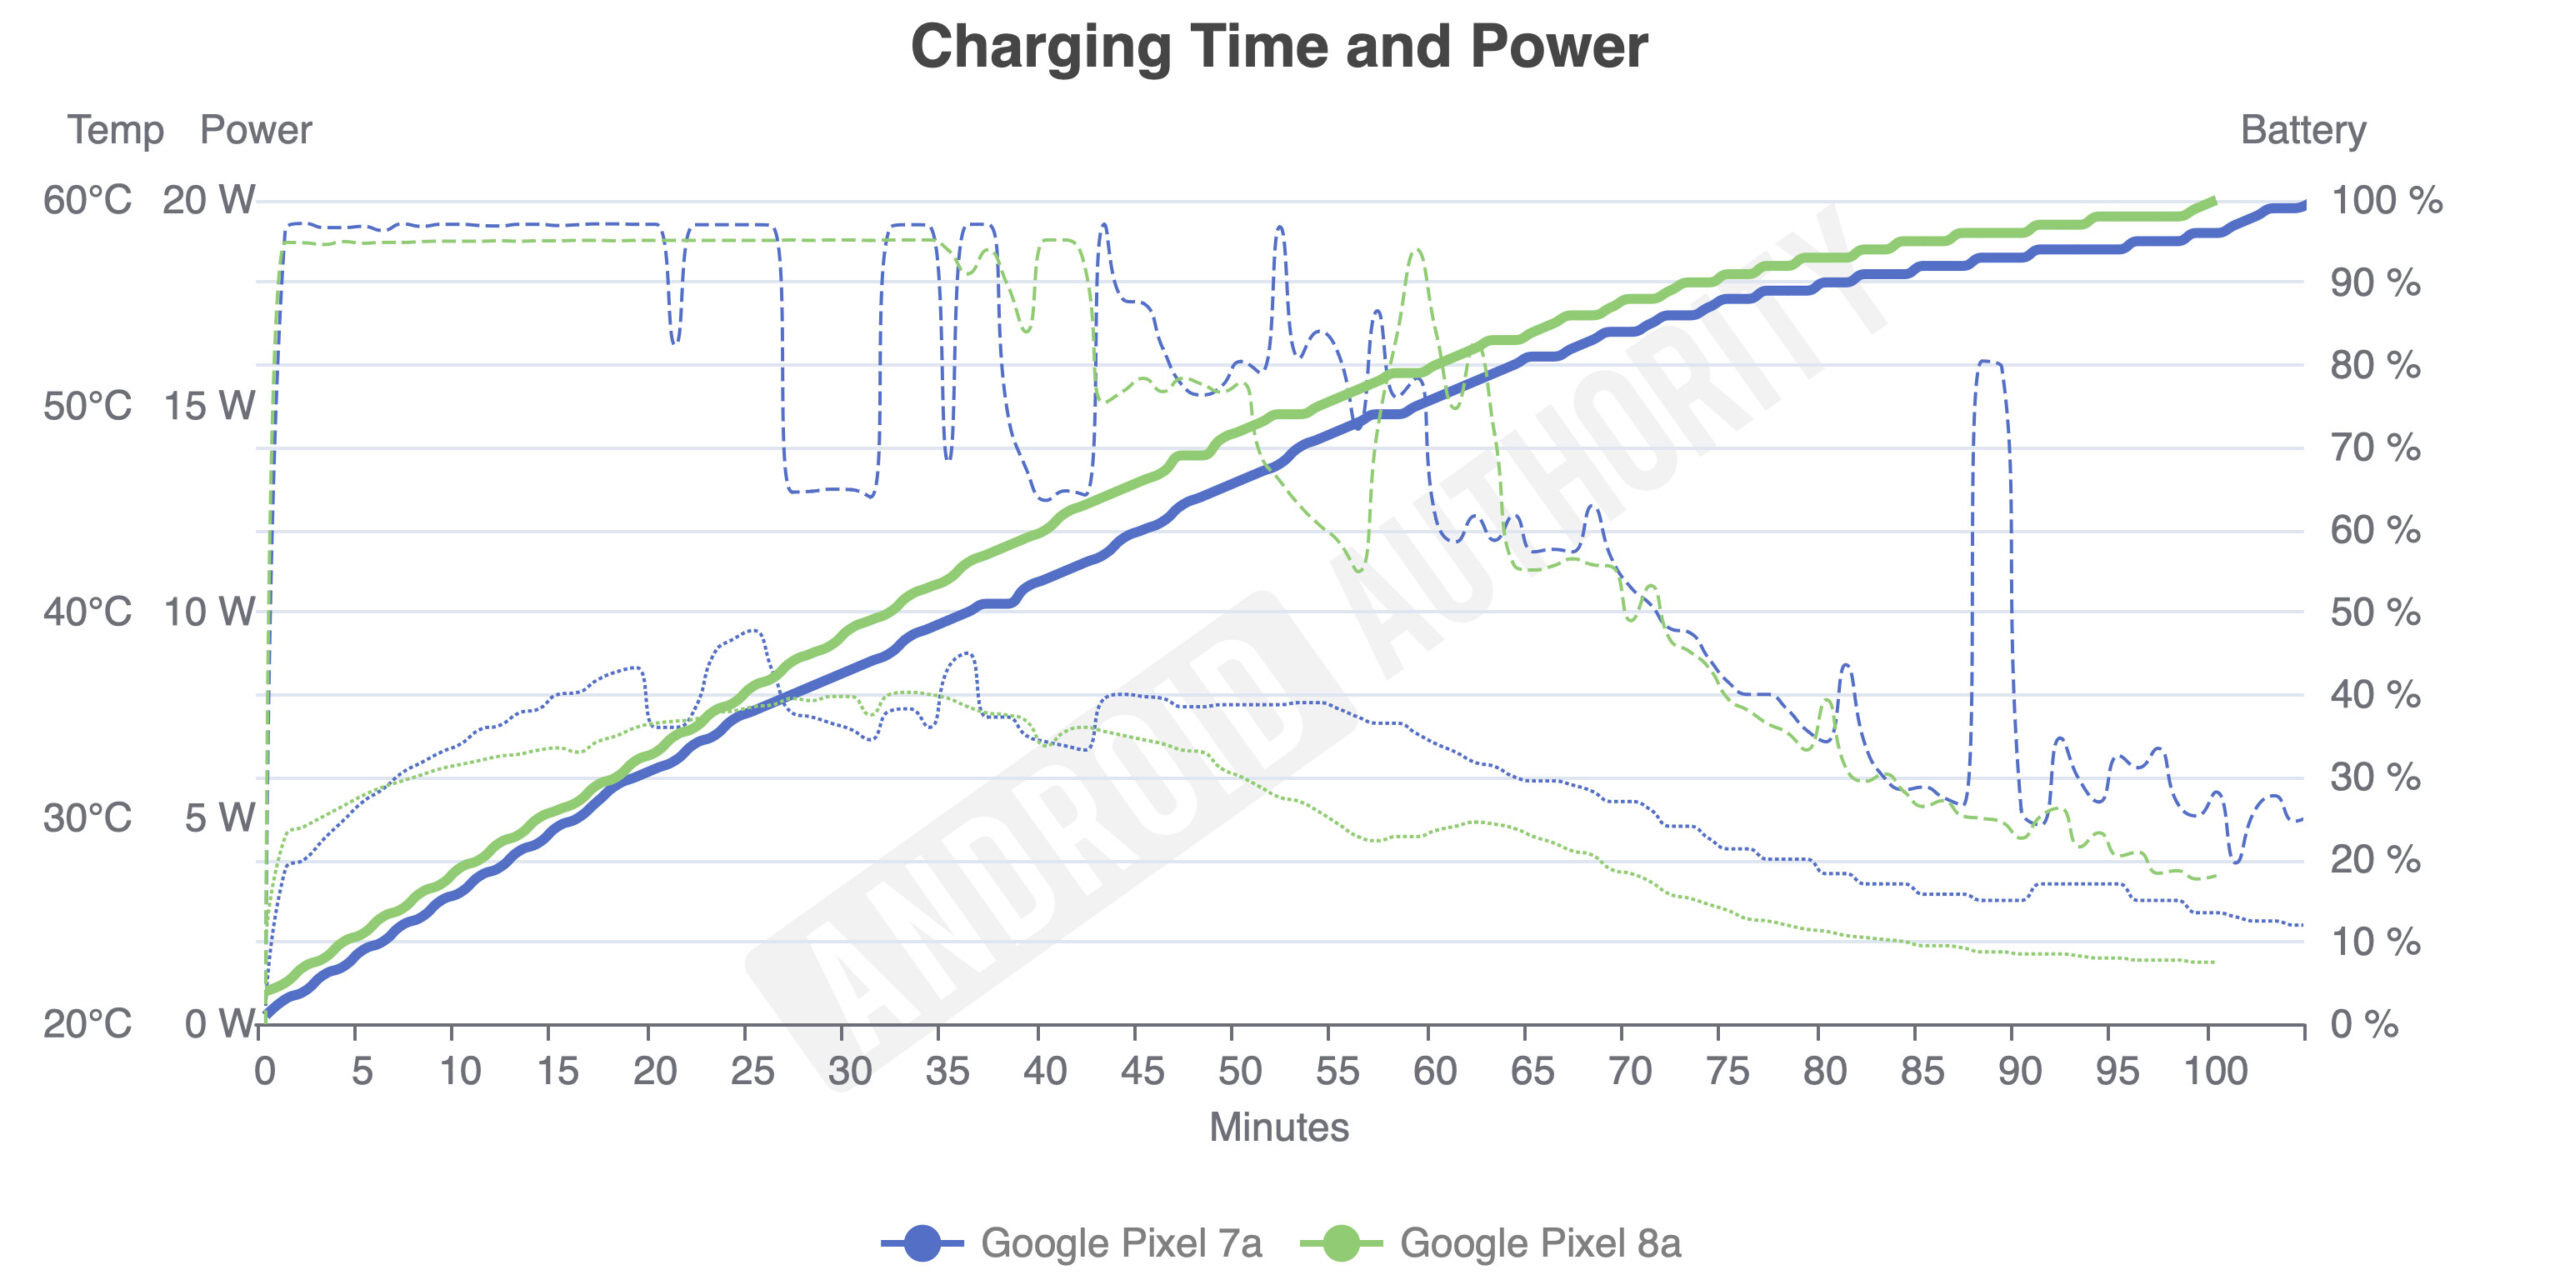 Google Pixel 8a vs Pixel 7a charging time